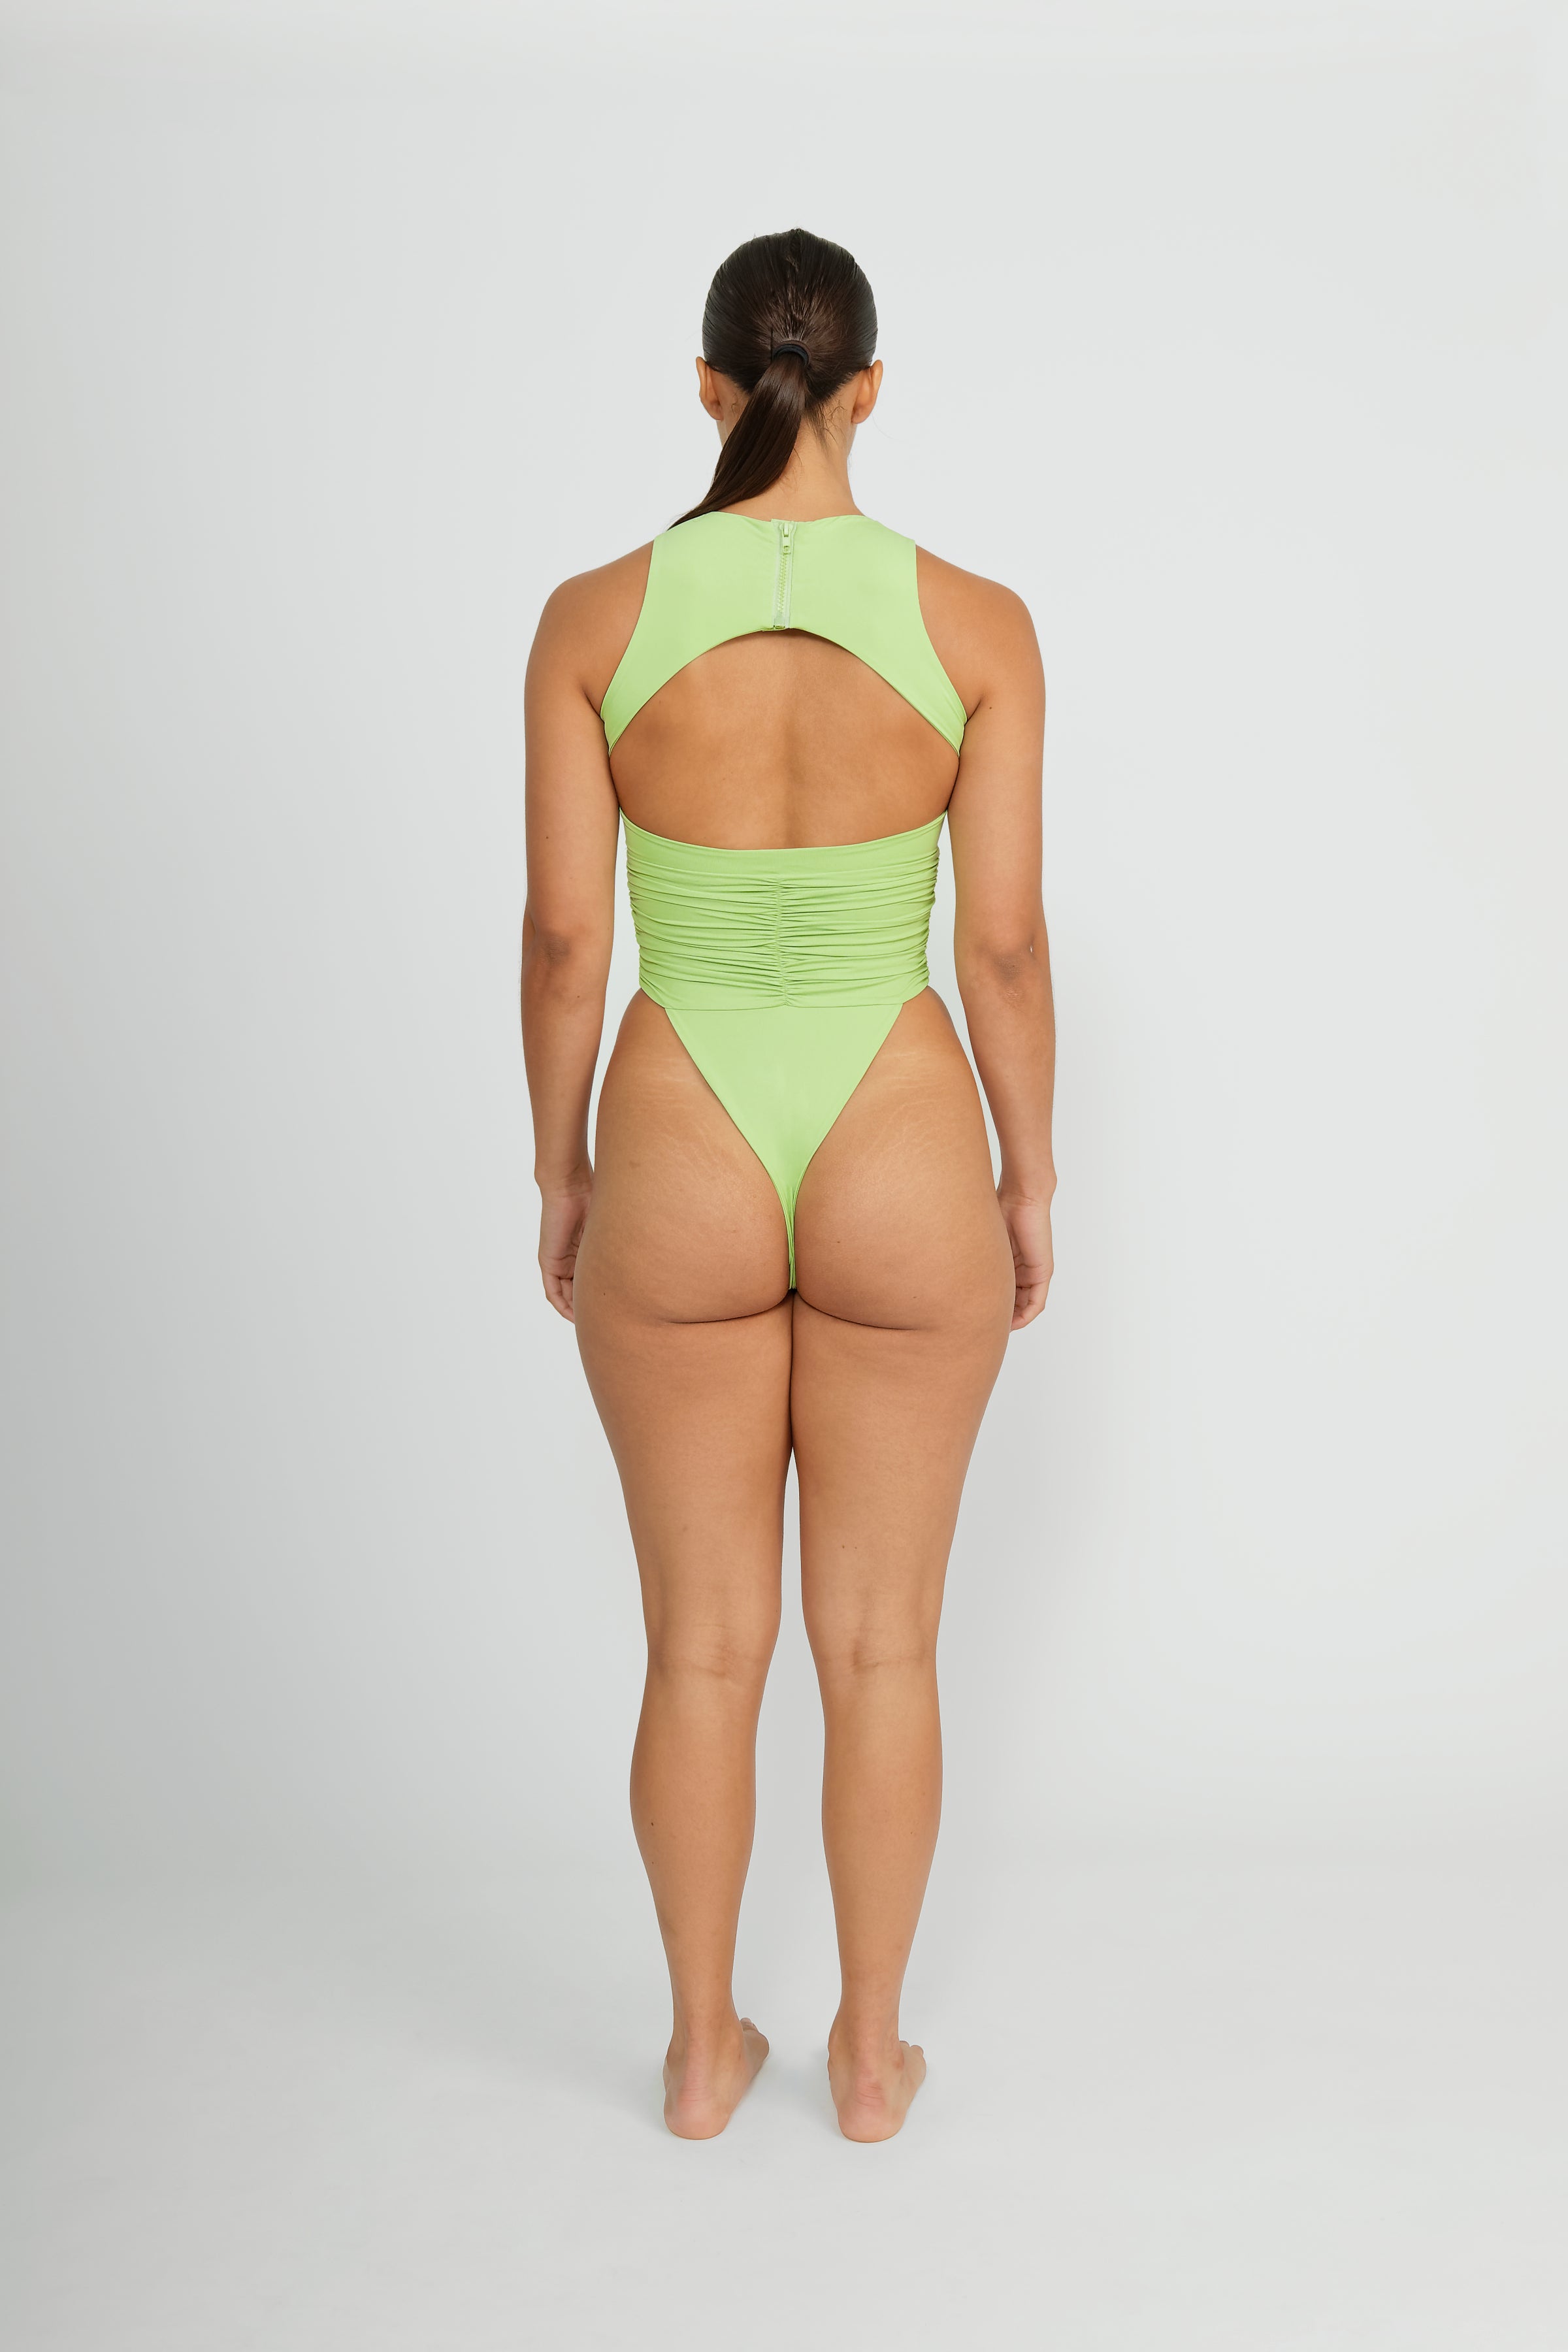 One piece swimsuit - strapless swimsuit - shiny green color – YaelAdmoni